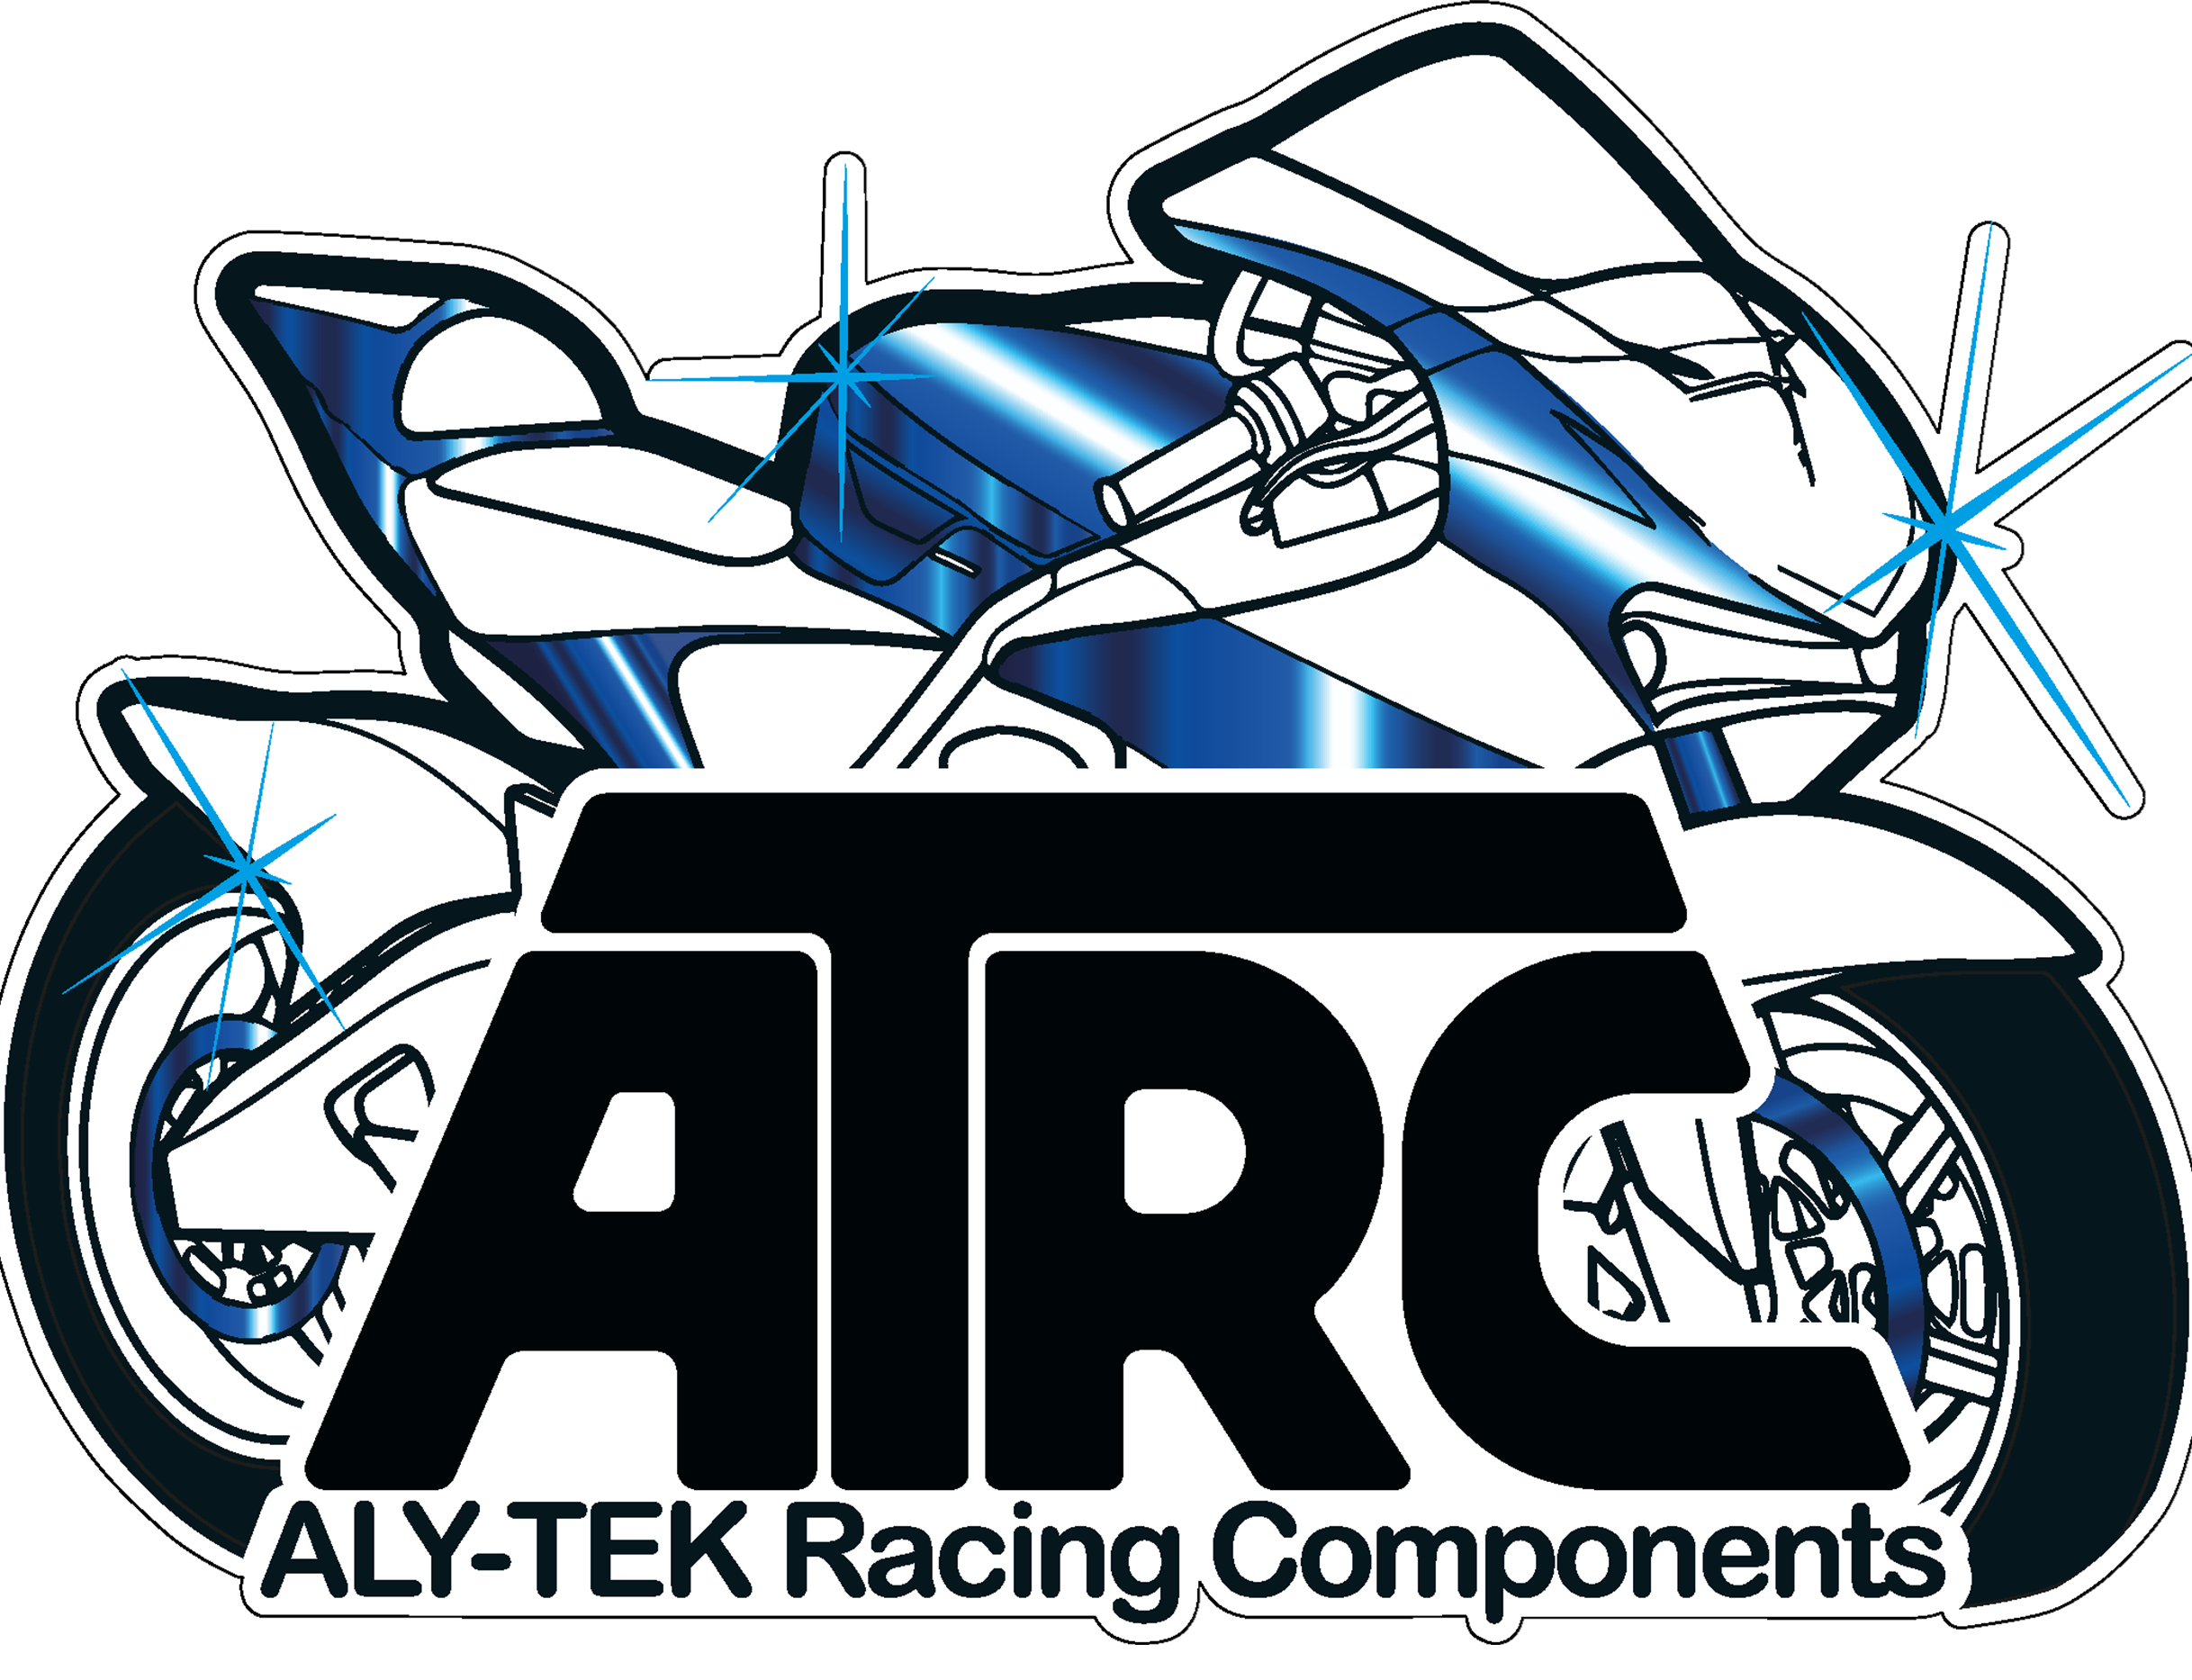 Aly-Tek Racing Components